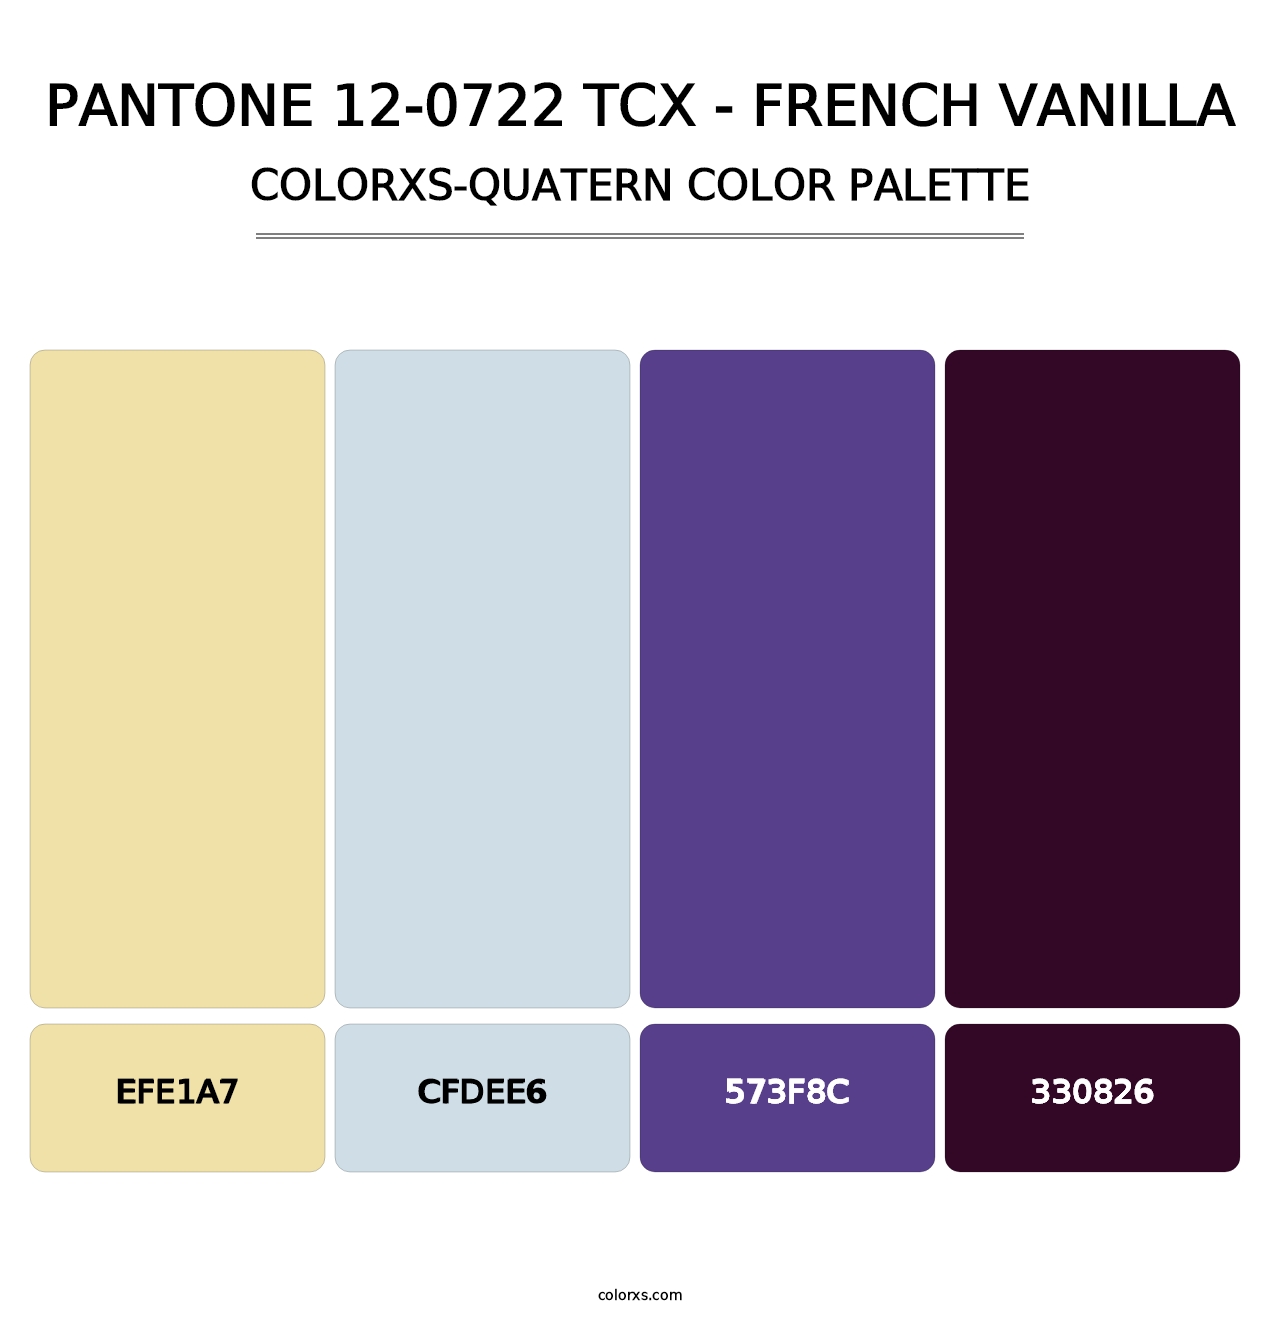 PANTONE 12-0722 TCX - French Vanilla - Colorxs Quatern Palette